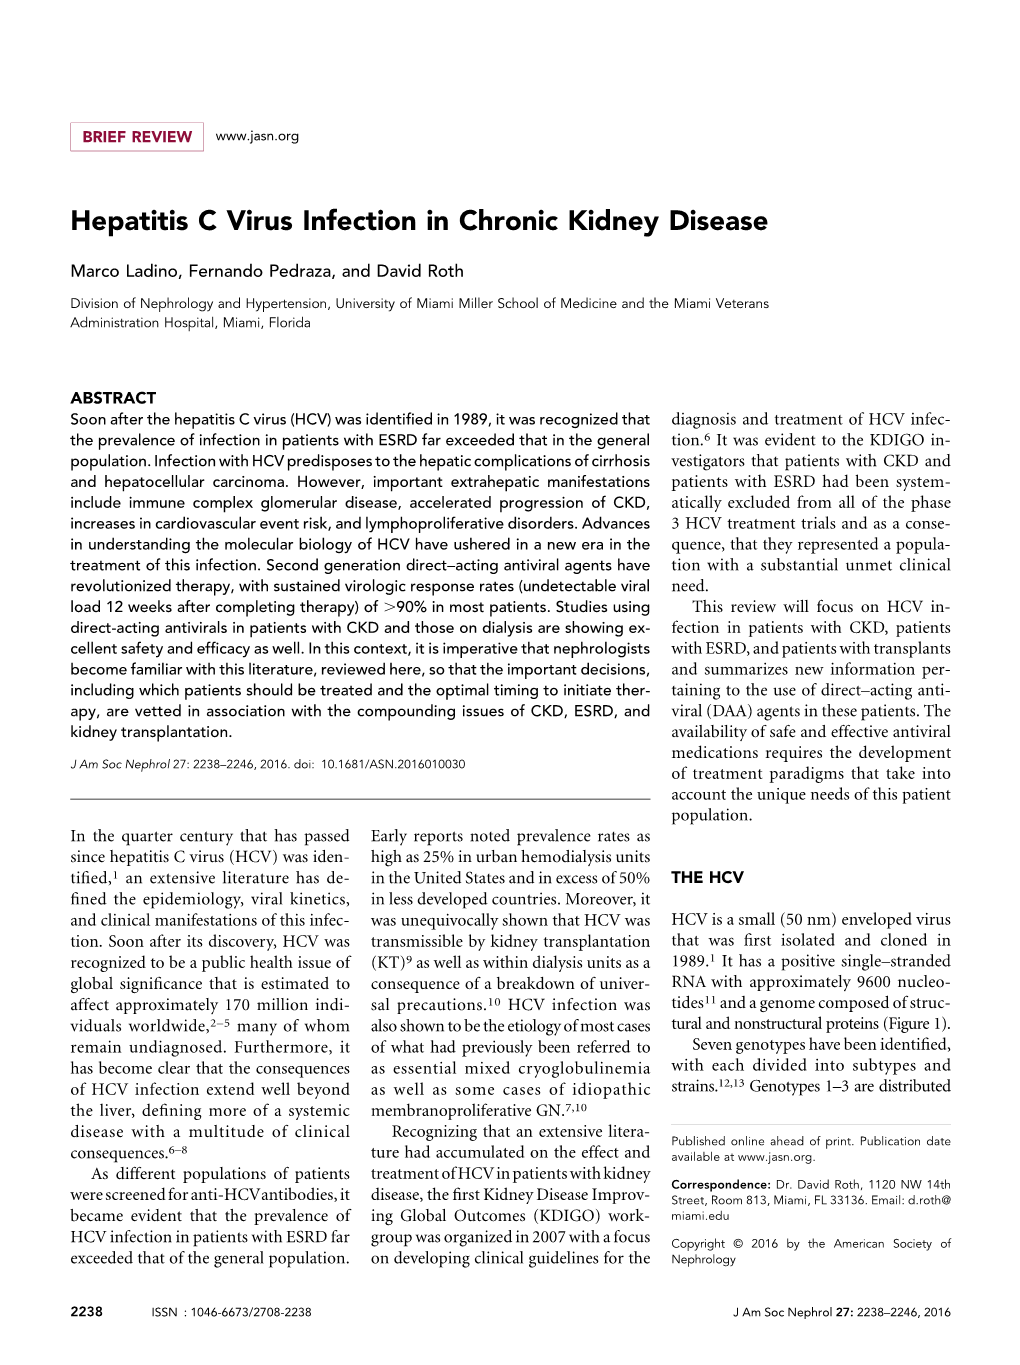 Hepatitis C Virus Infection in Chronic Kidney Disease